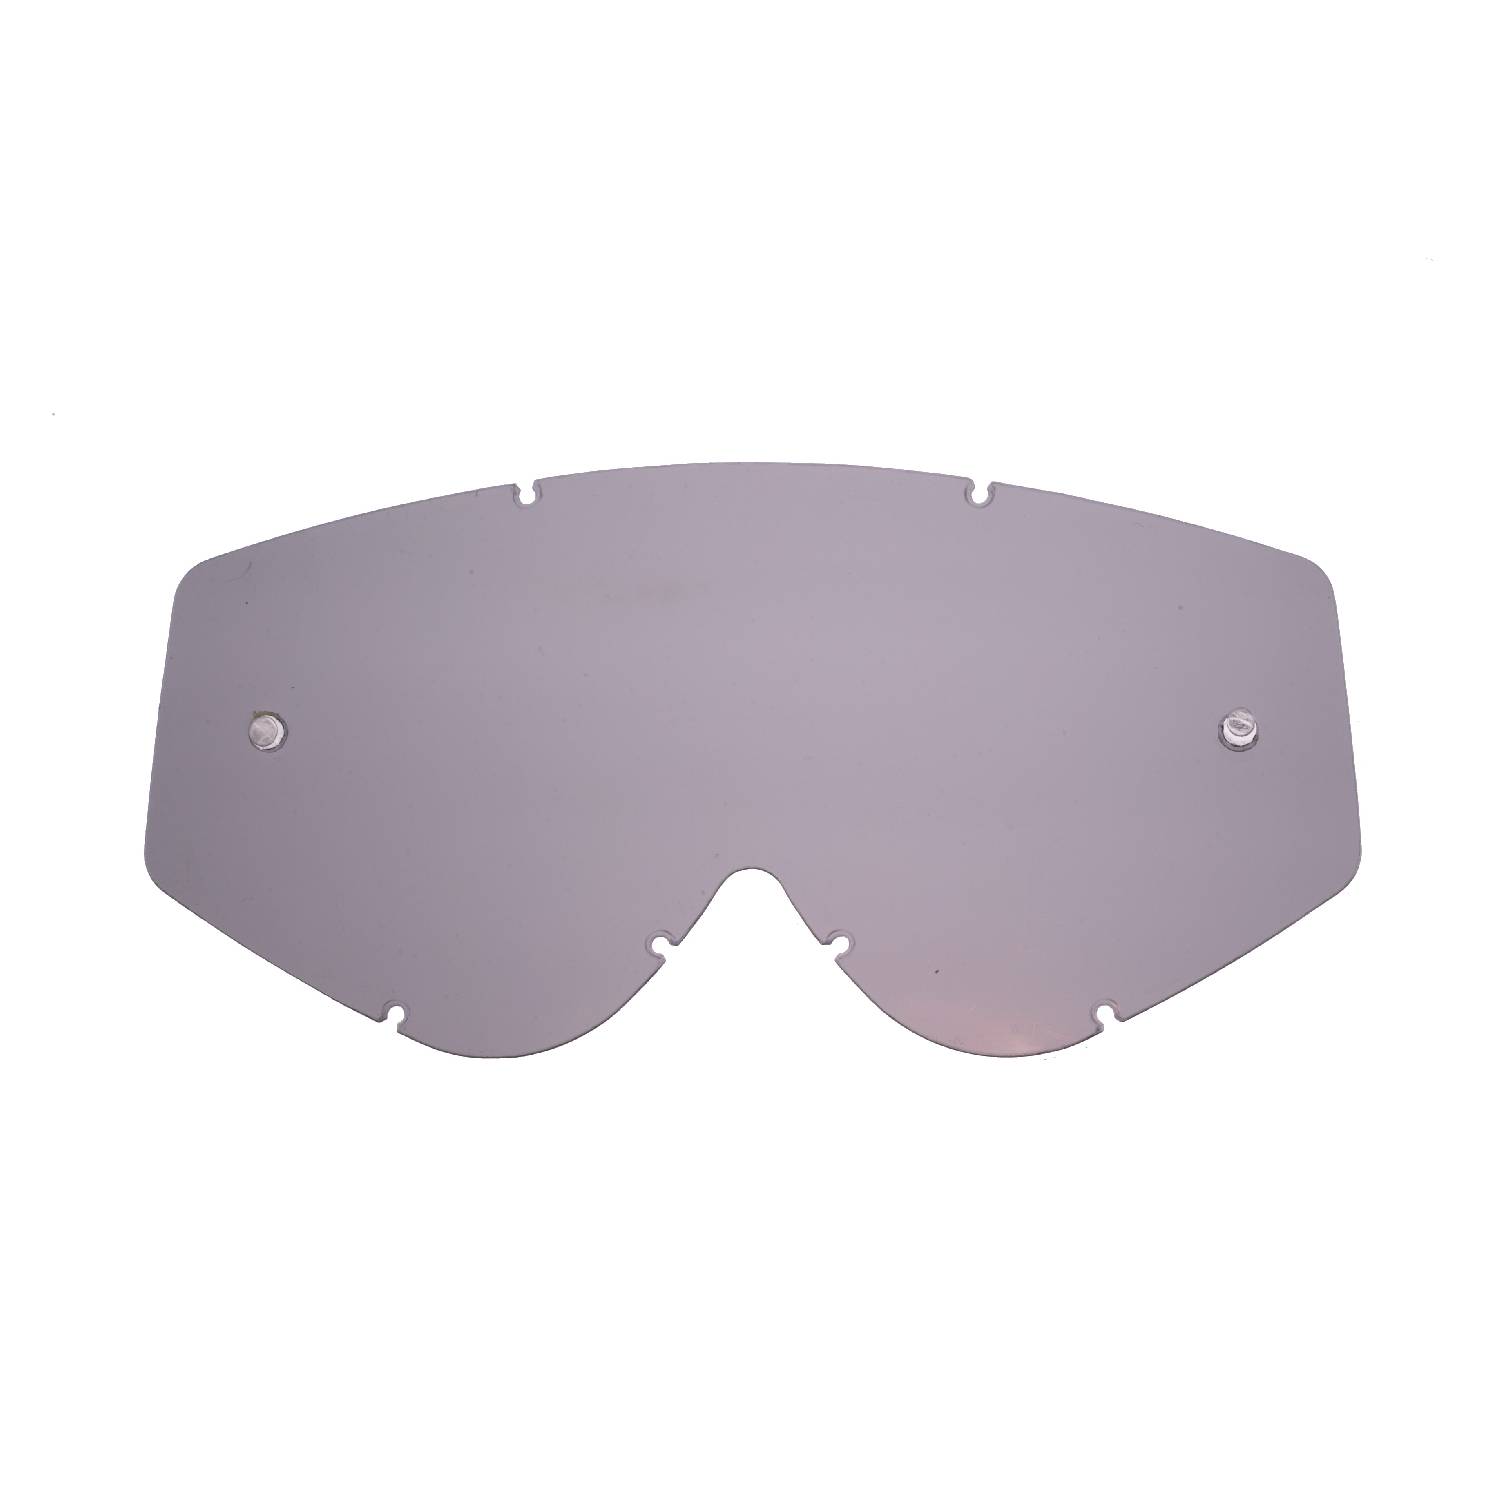 HZ GMZ SE-411136-HZ polar replacement lenses for goggles